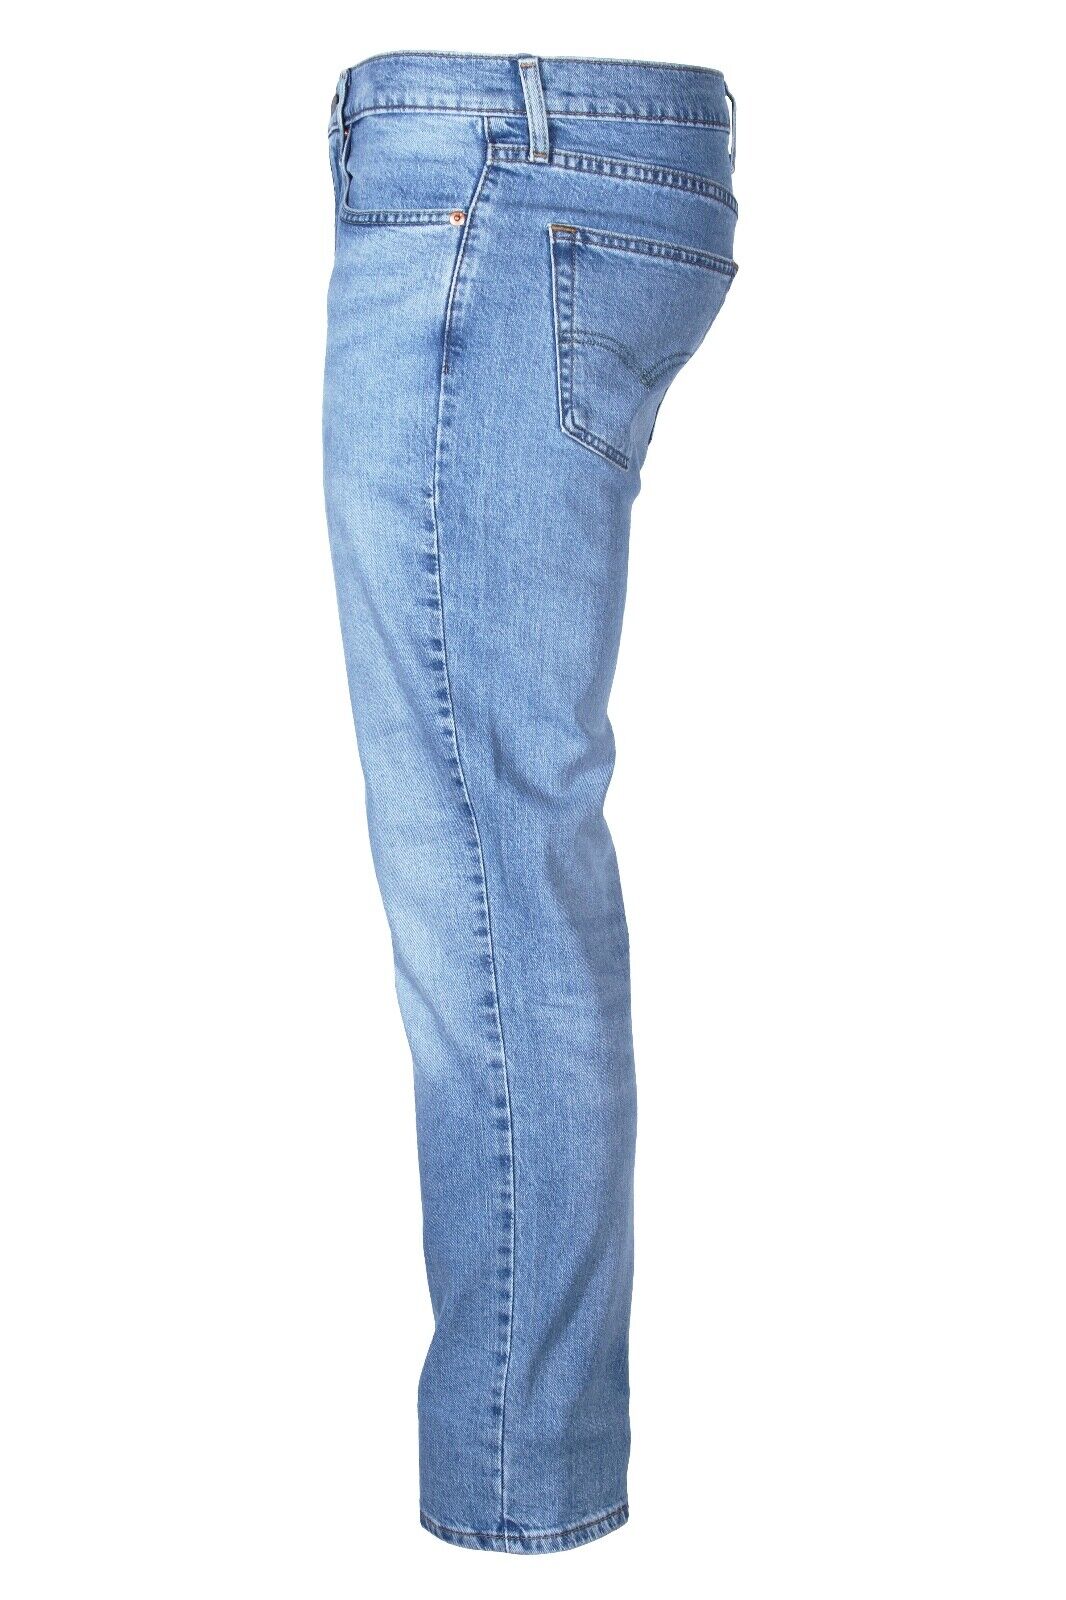 Levi’s 511 Slim Fit Men's Jeans Wash: Dolf Make It Adv Style# 04511-5127